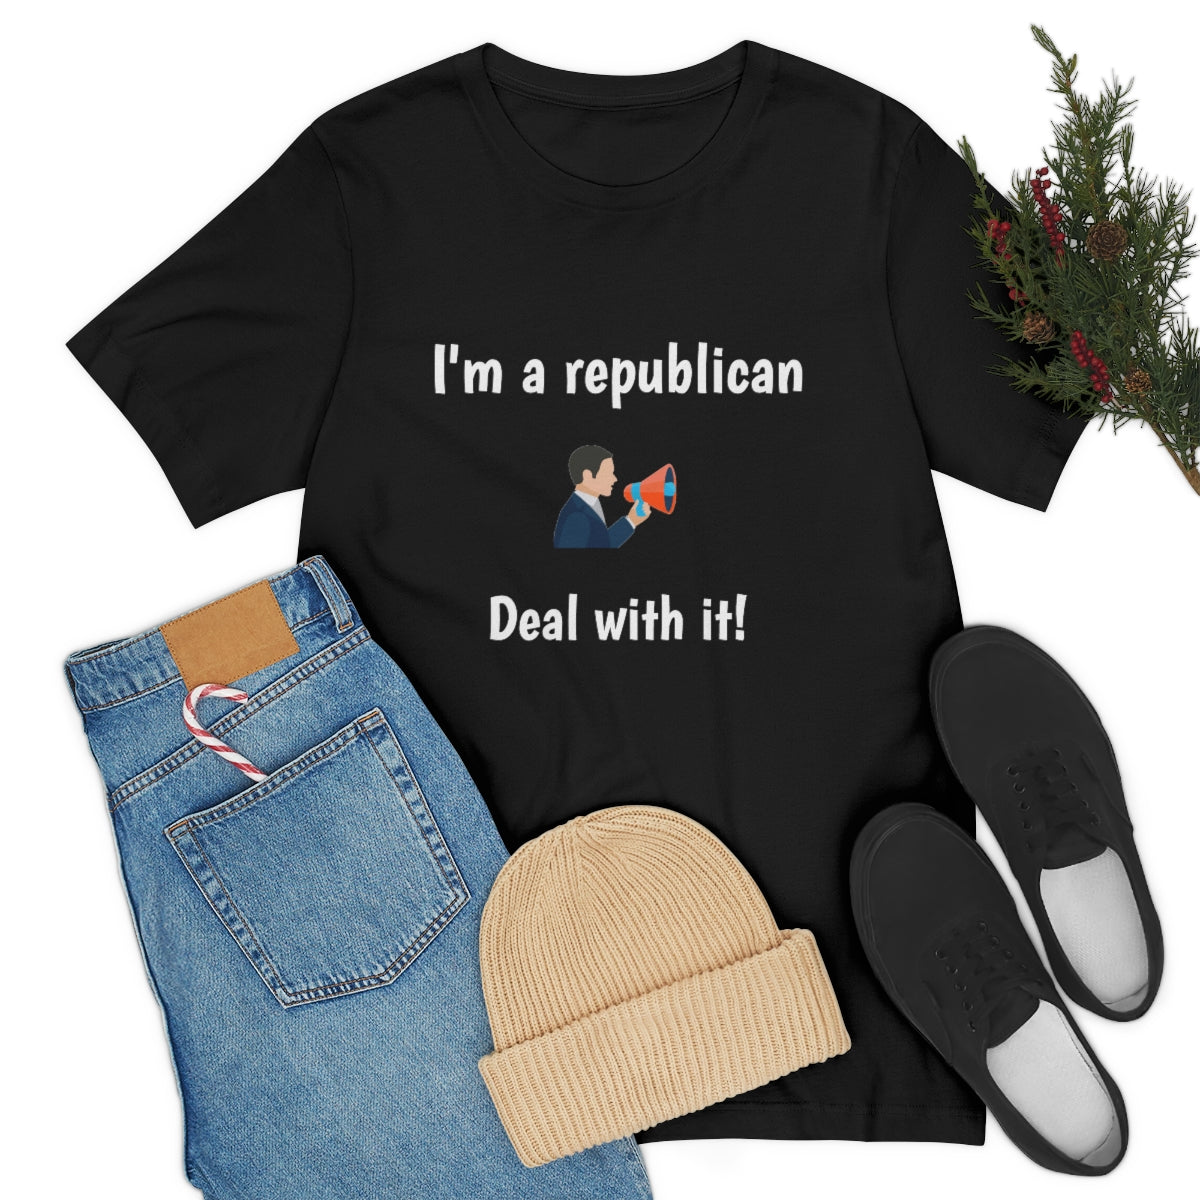 I'm a Republican - Funny Unisex Short Sleeve Tee